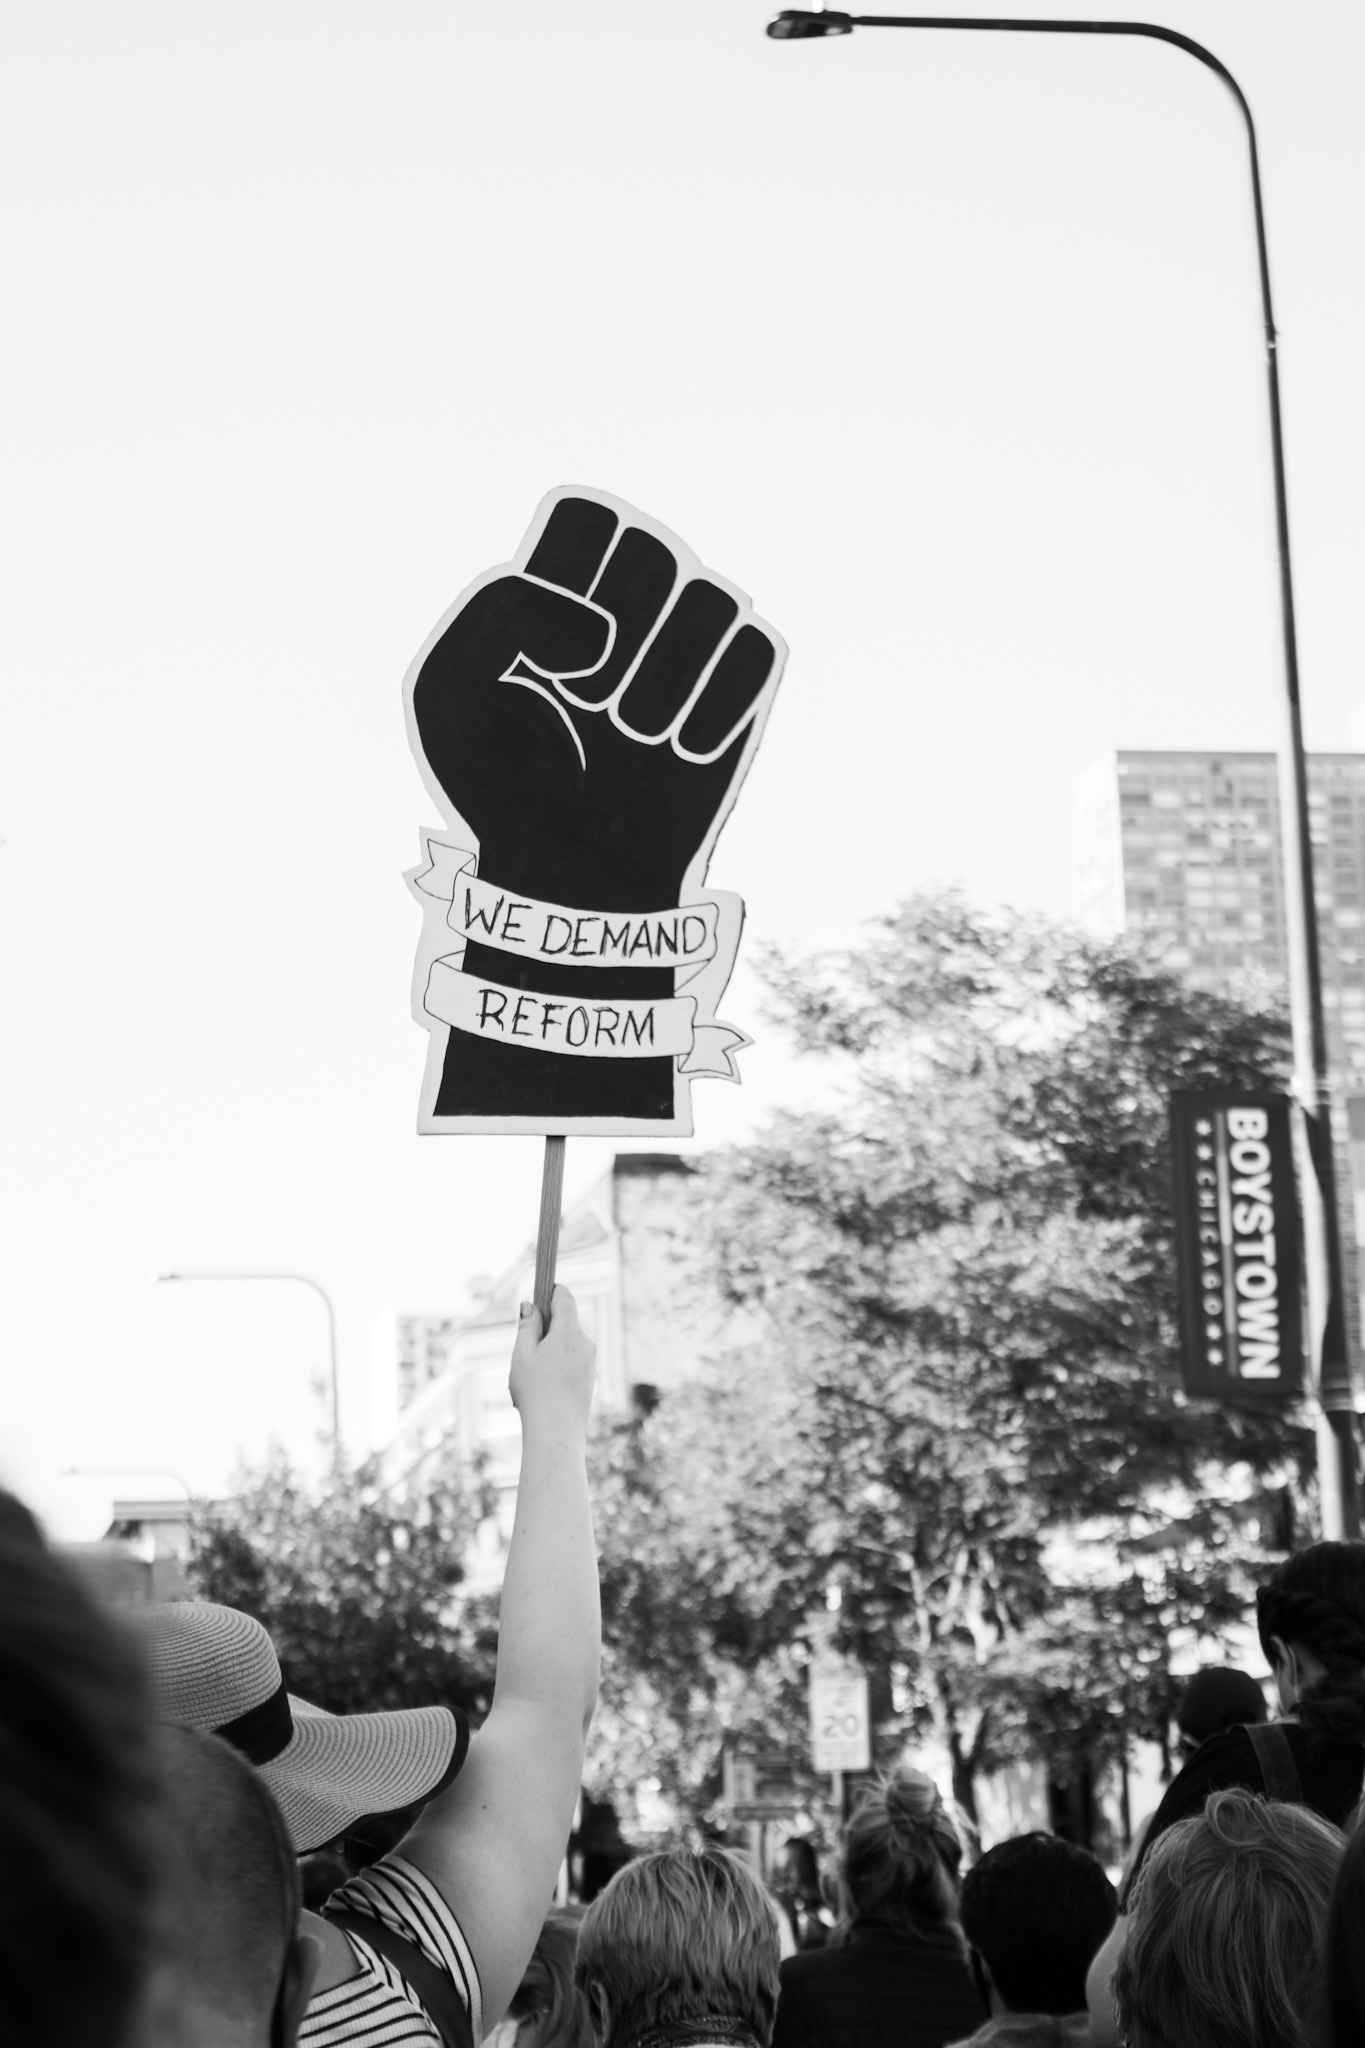 Photo taken of a Black Lives Matter protest